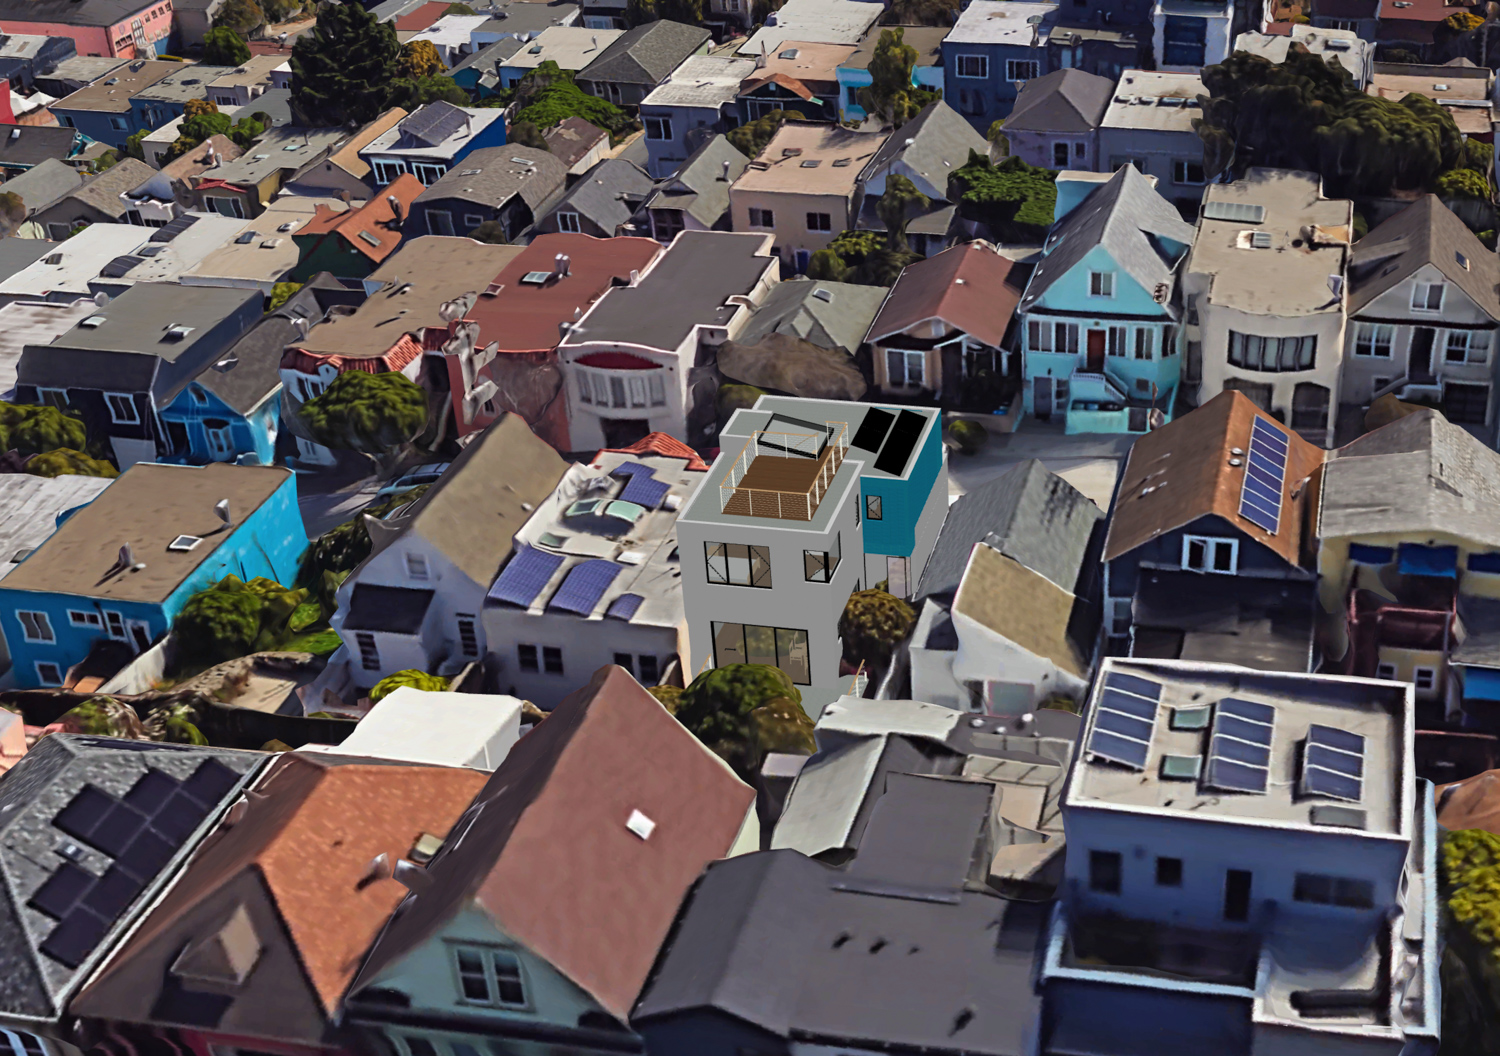 76 Putnam Street aerial view, rendering by Zack de Vito Architecture